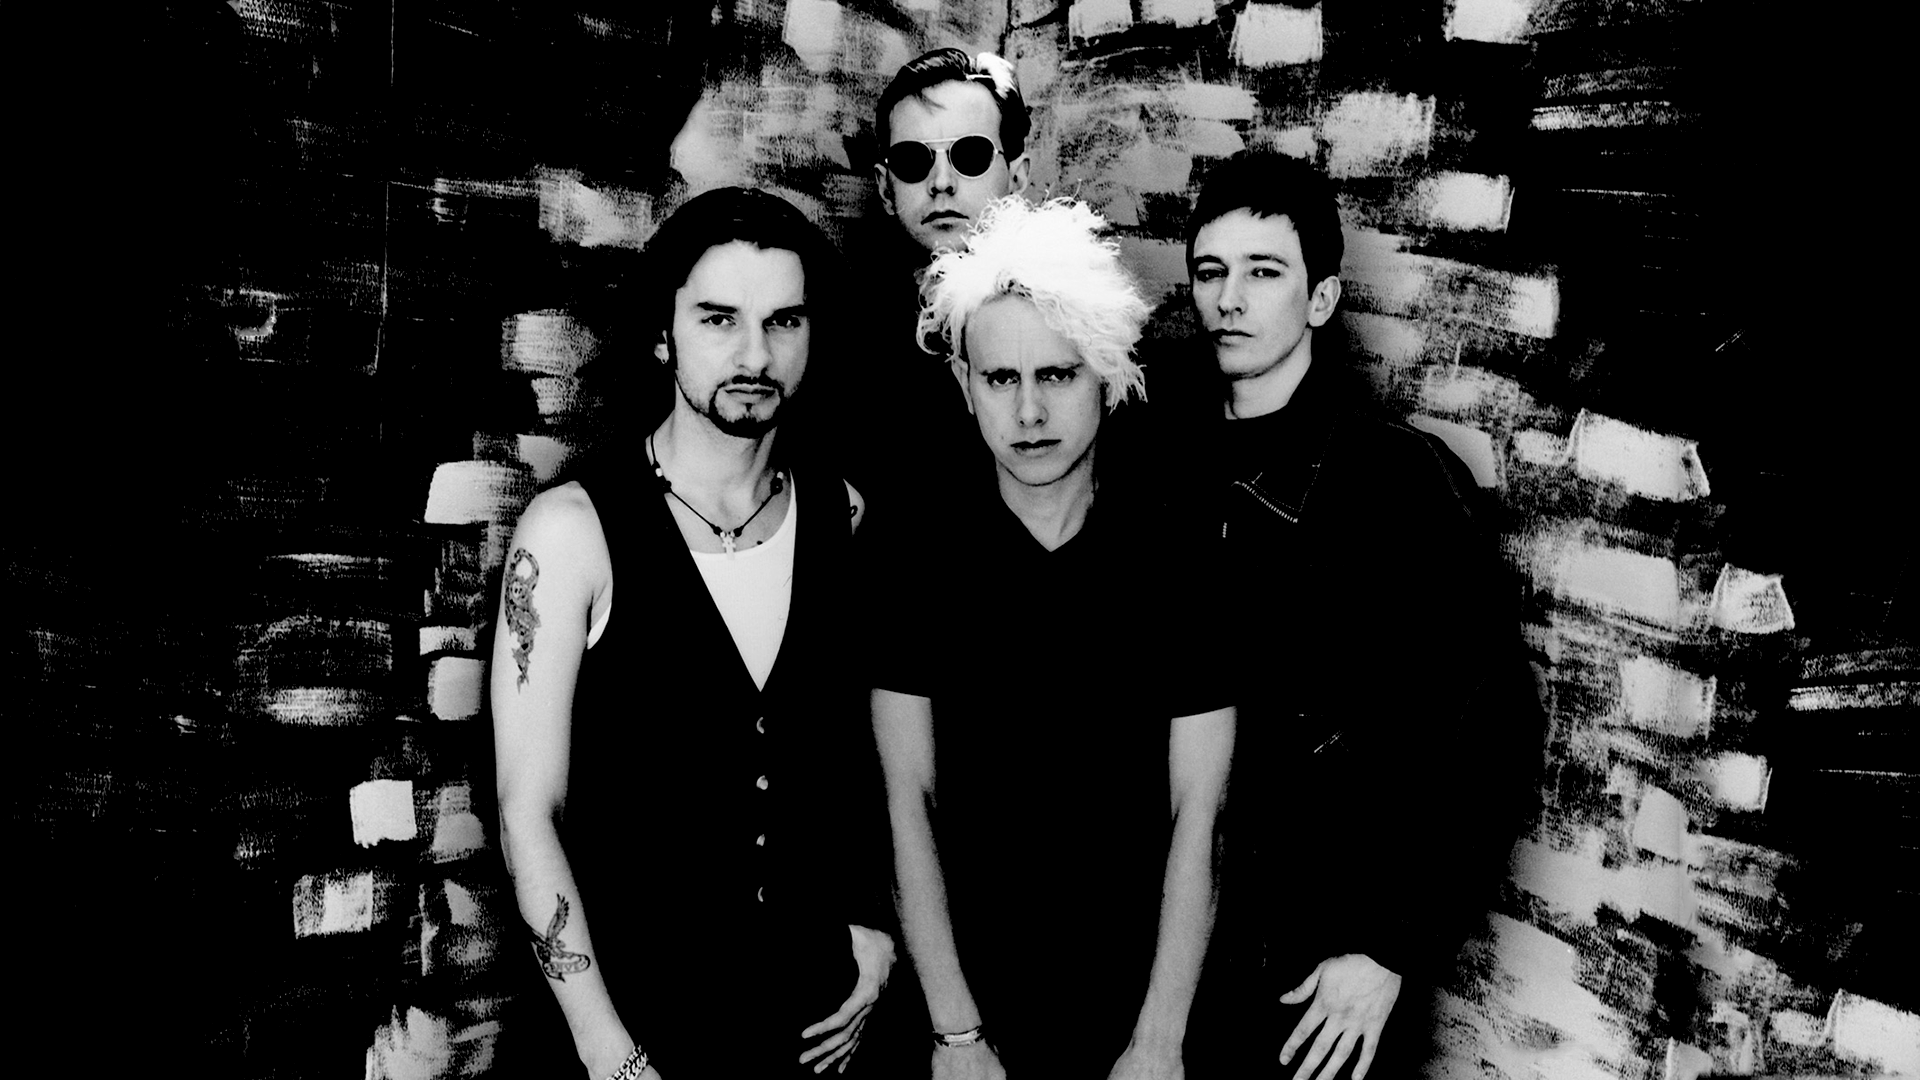 Depeche Mode Wallpaper Image Photo Picture Background